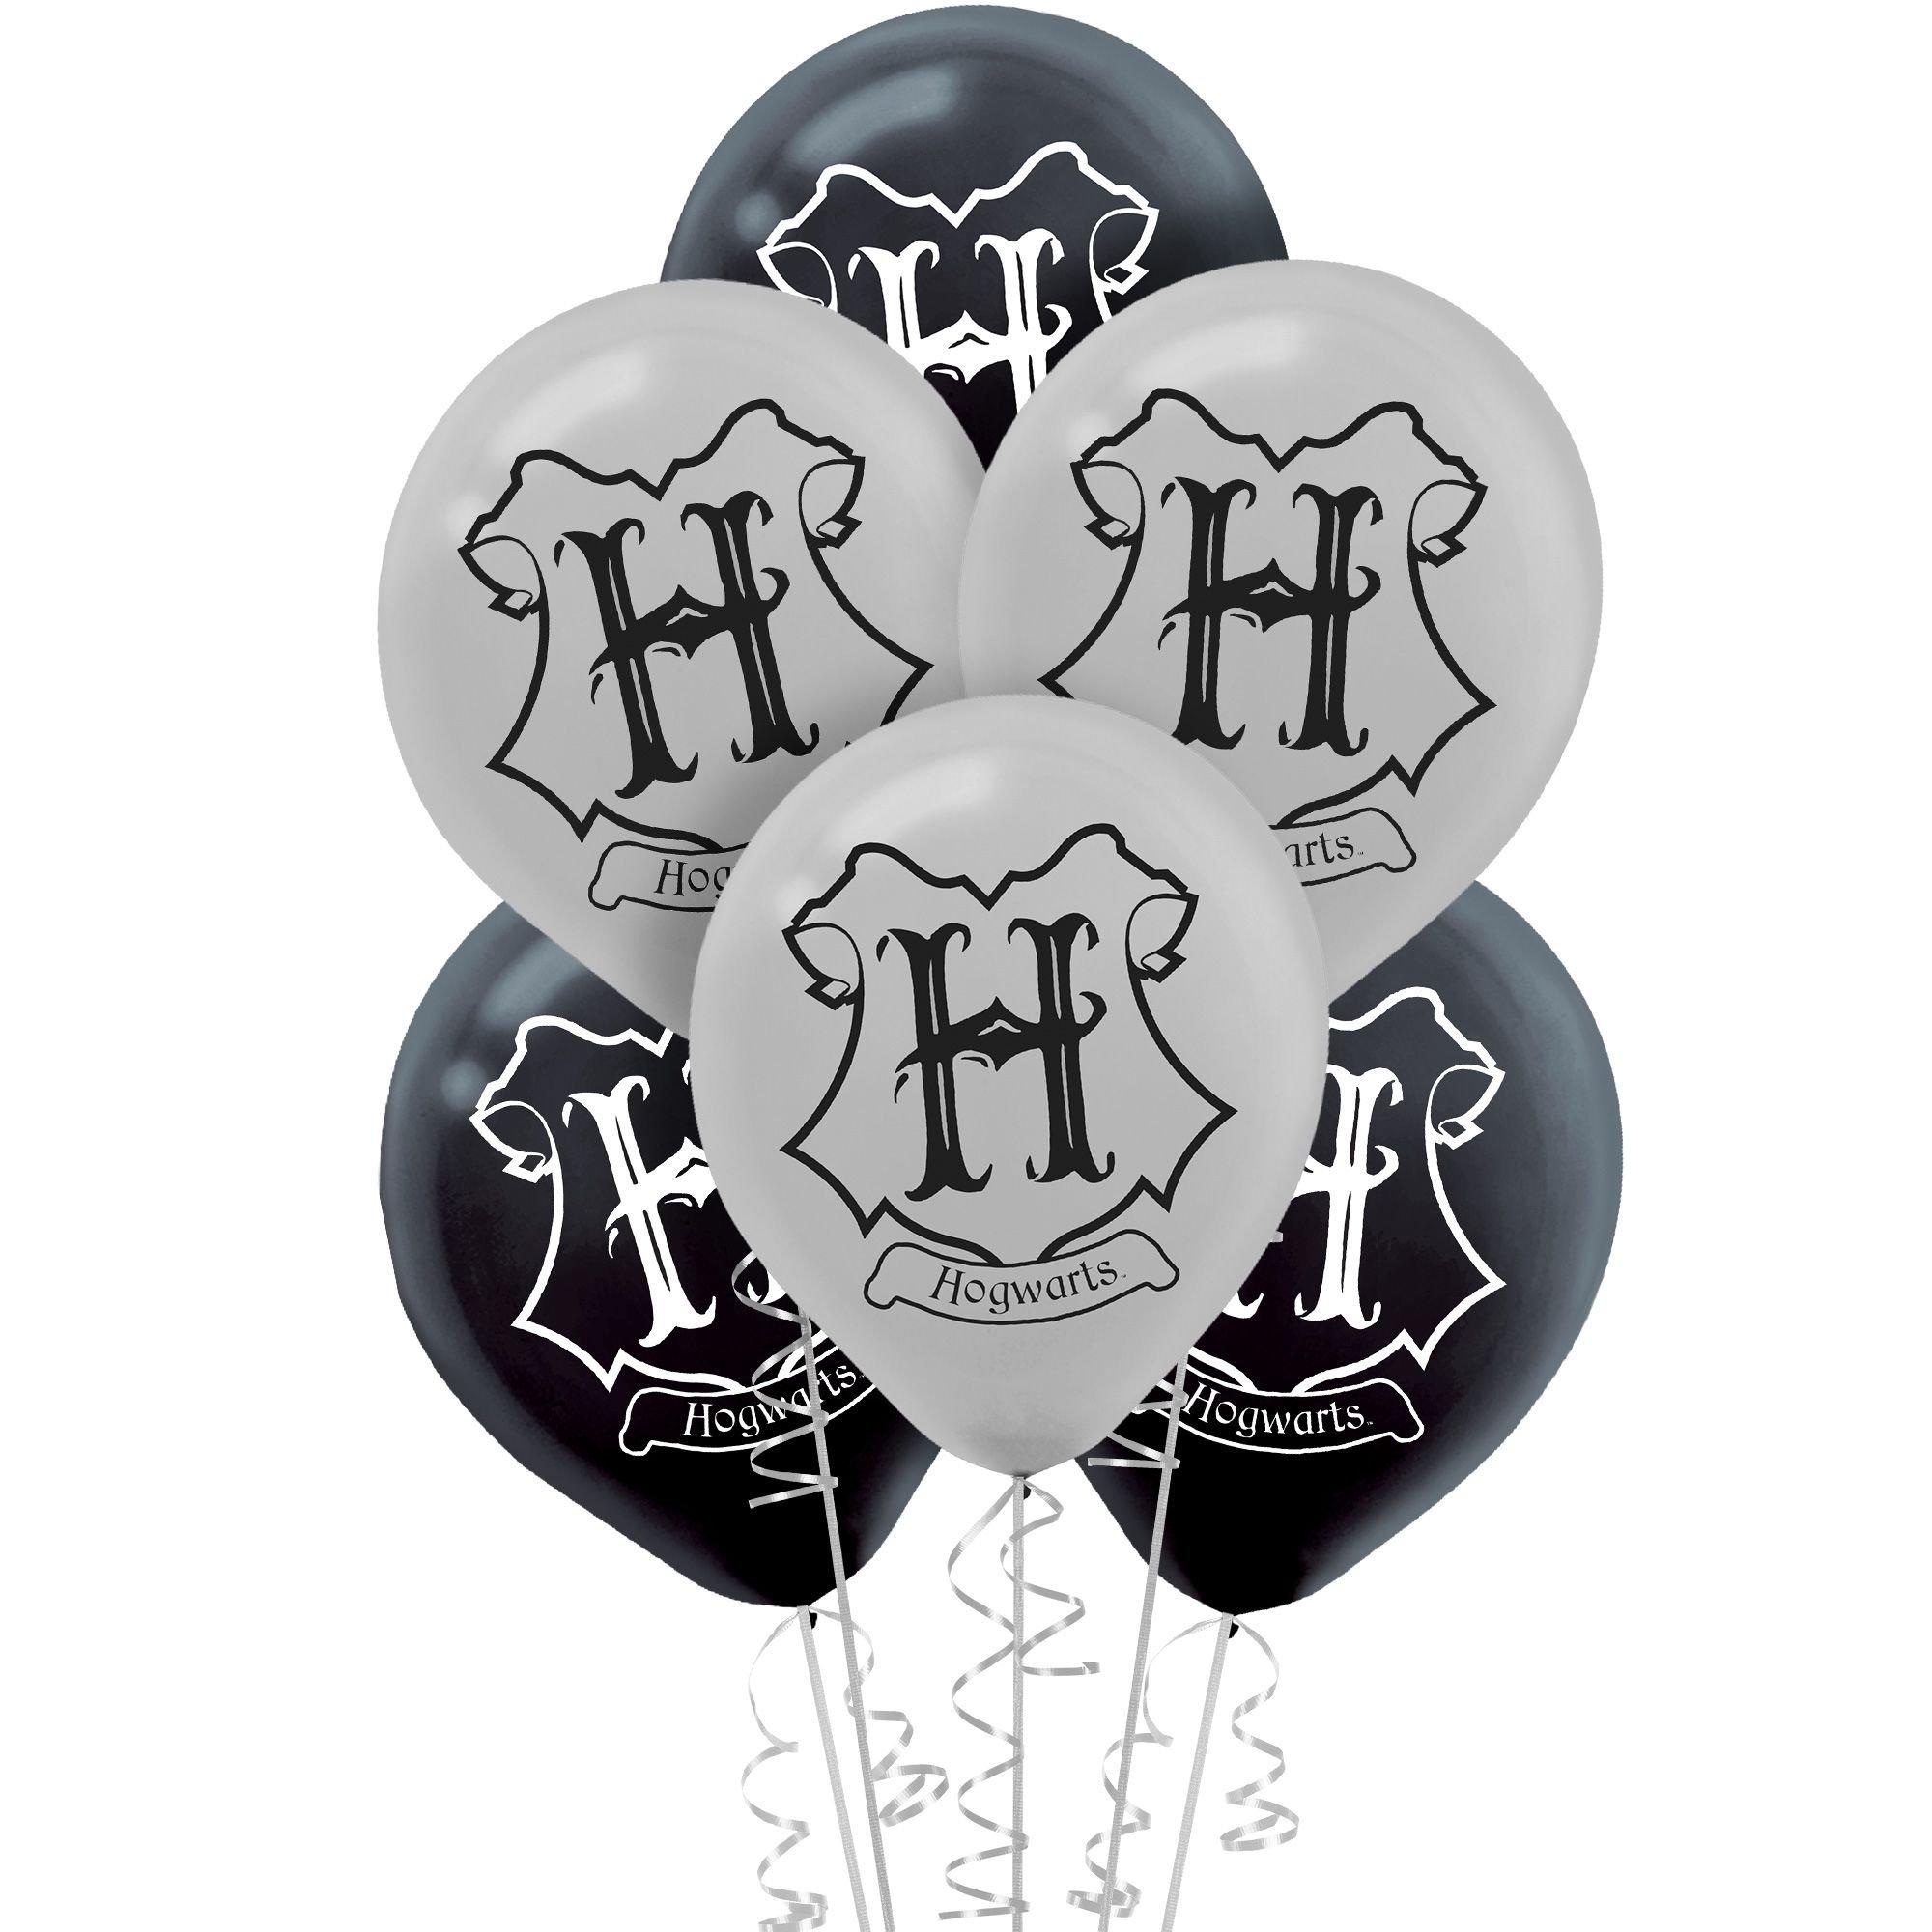 Bloonzhn - Harry Potter balloon bouquet! #harrypotter